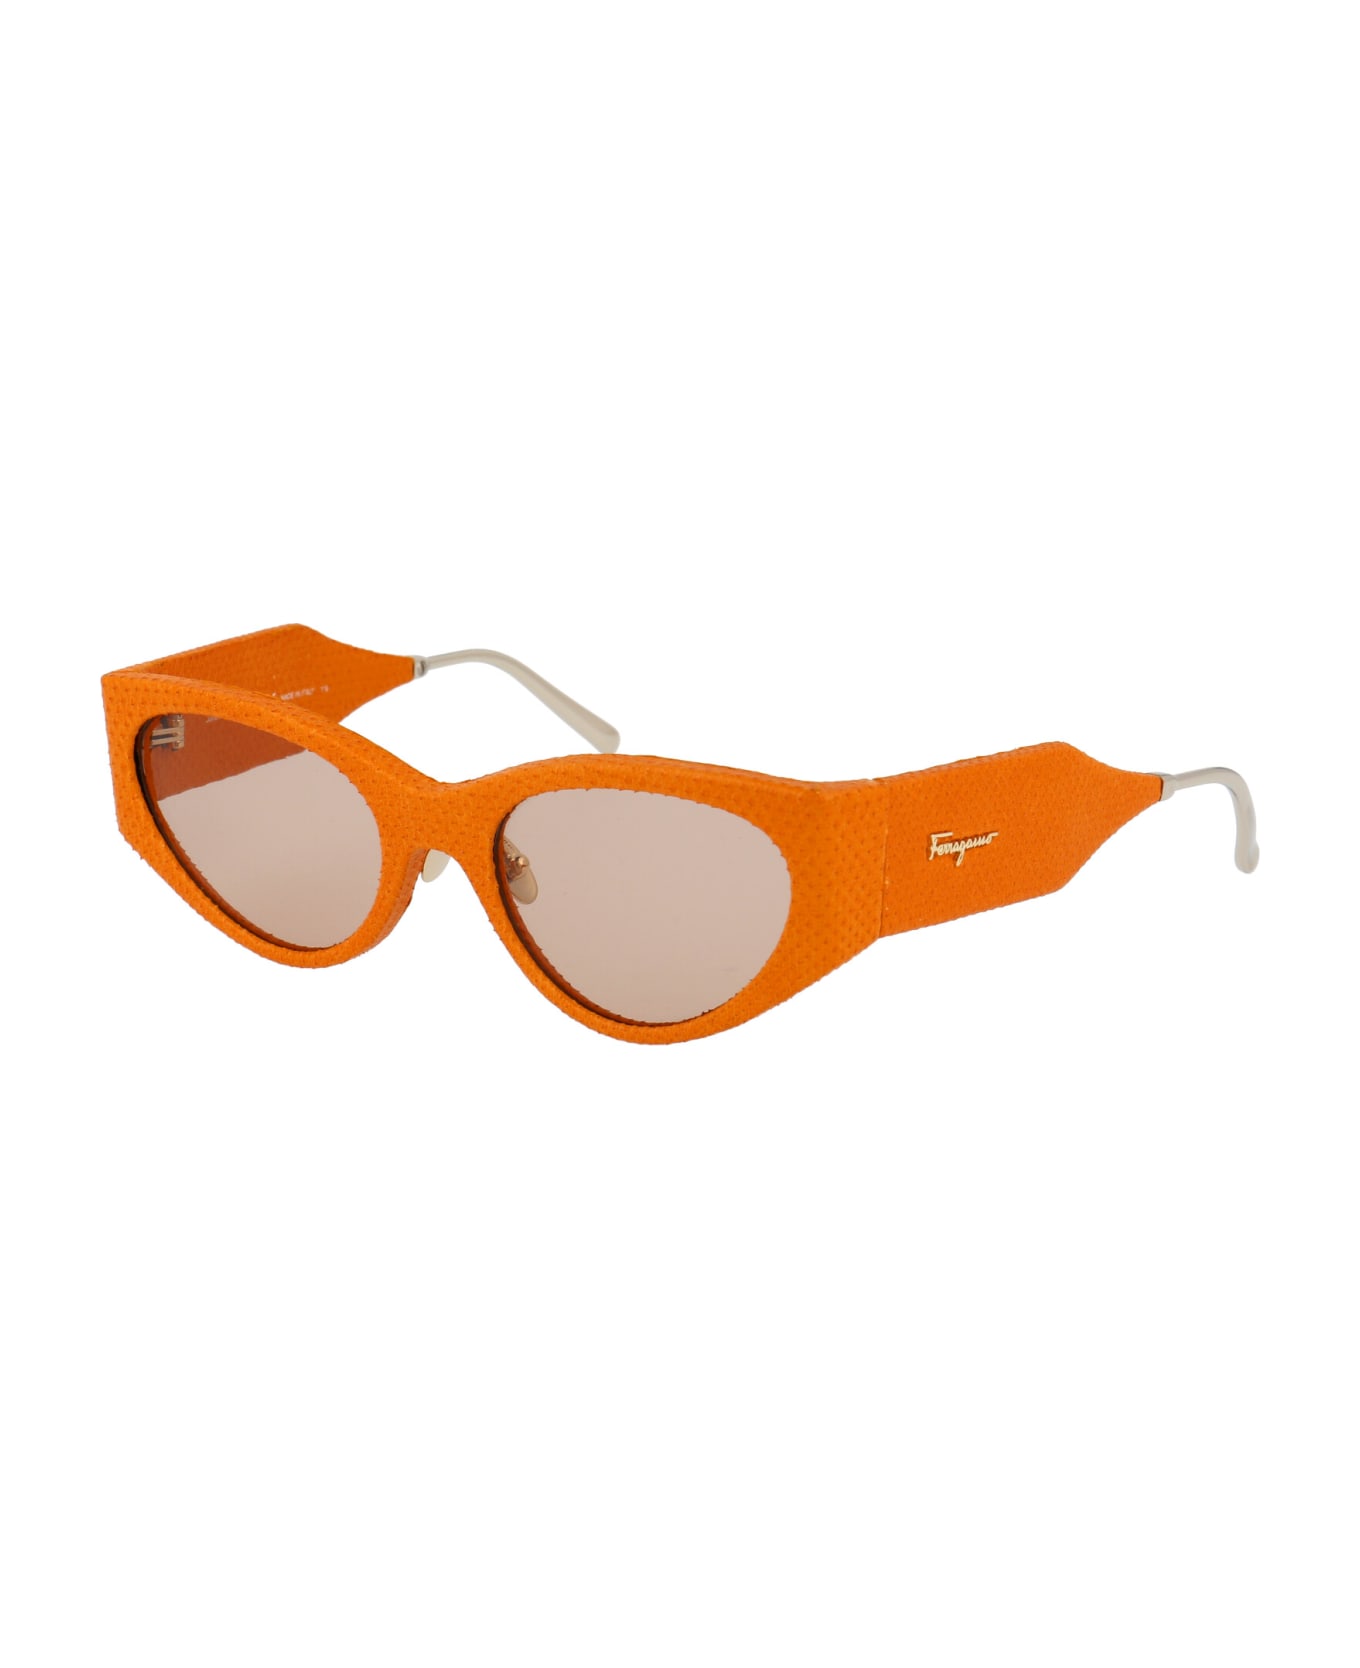 Salvatore Ferragamo Eyewear Sf950sl Sunglasses - 712 GOLDEN KARUNG サングラス